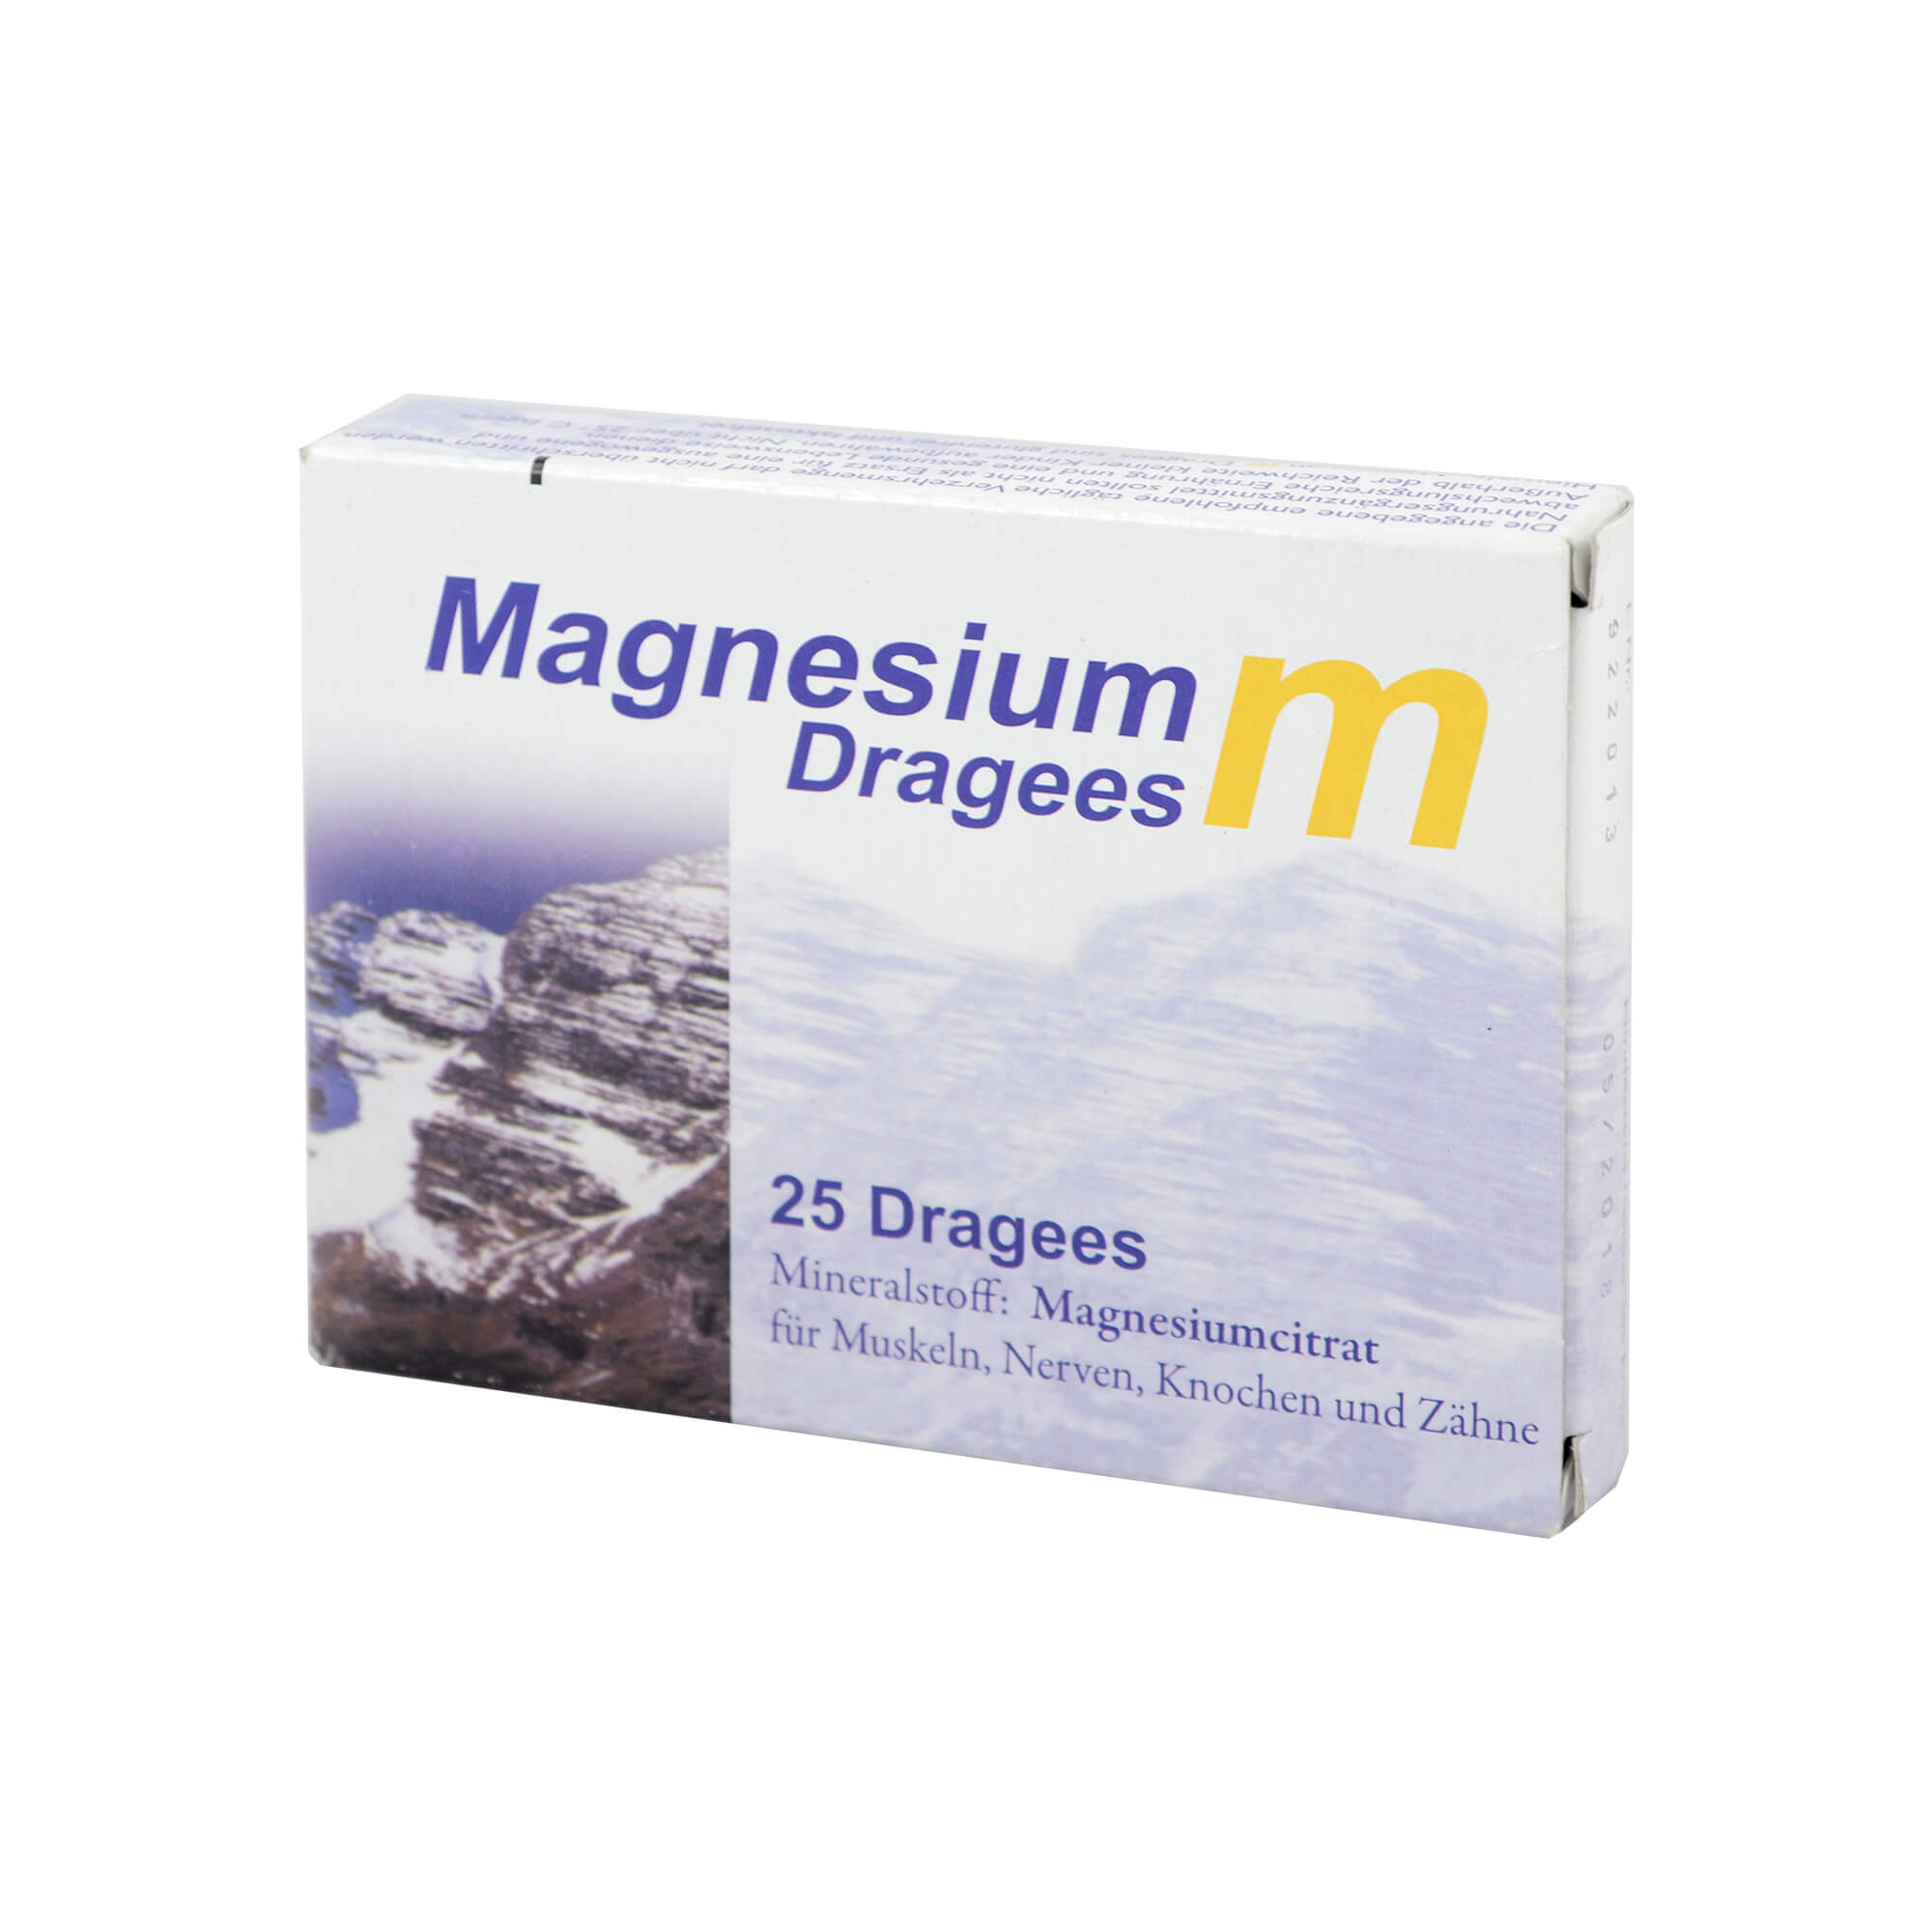 Nahrungsergänzungsmittel mit Magnesium.